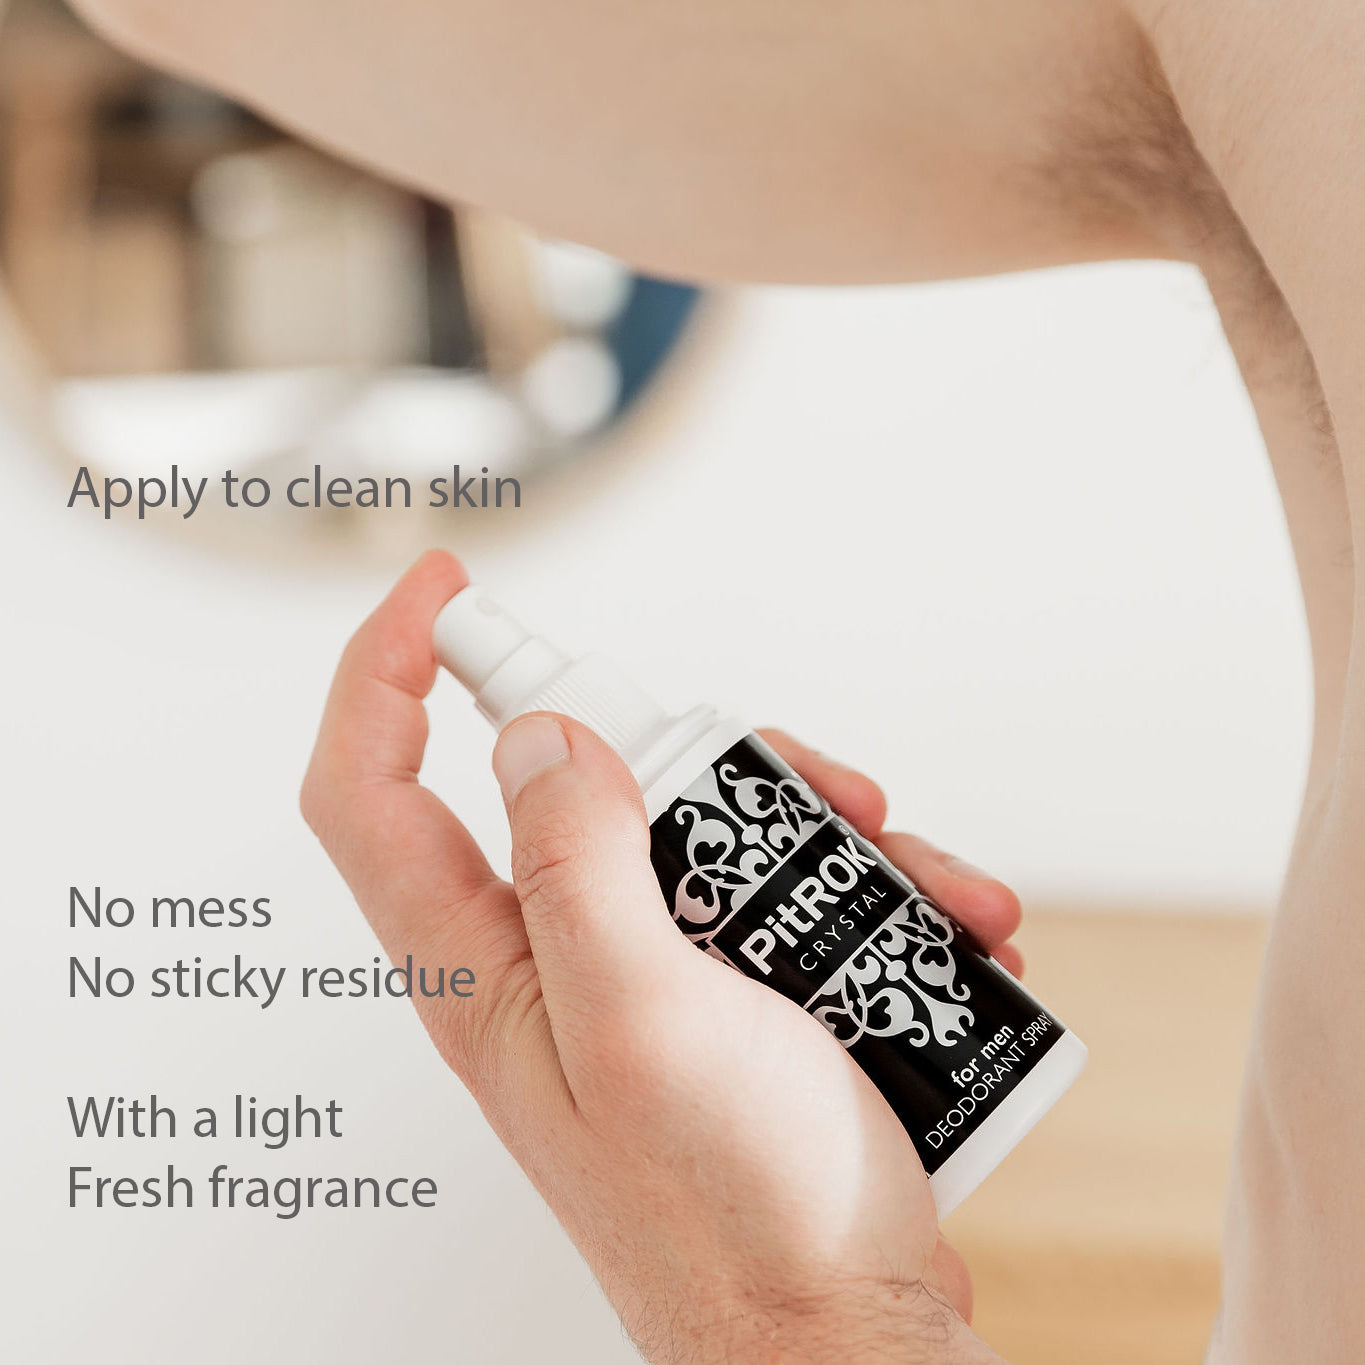 PitROK Crystal Natural Deodorant Spray 100ml - for Men